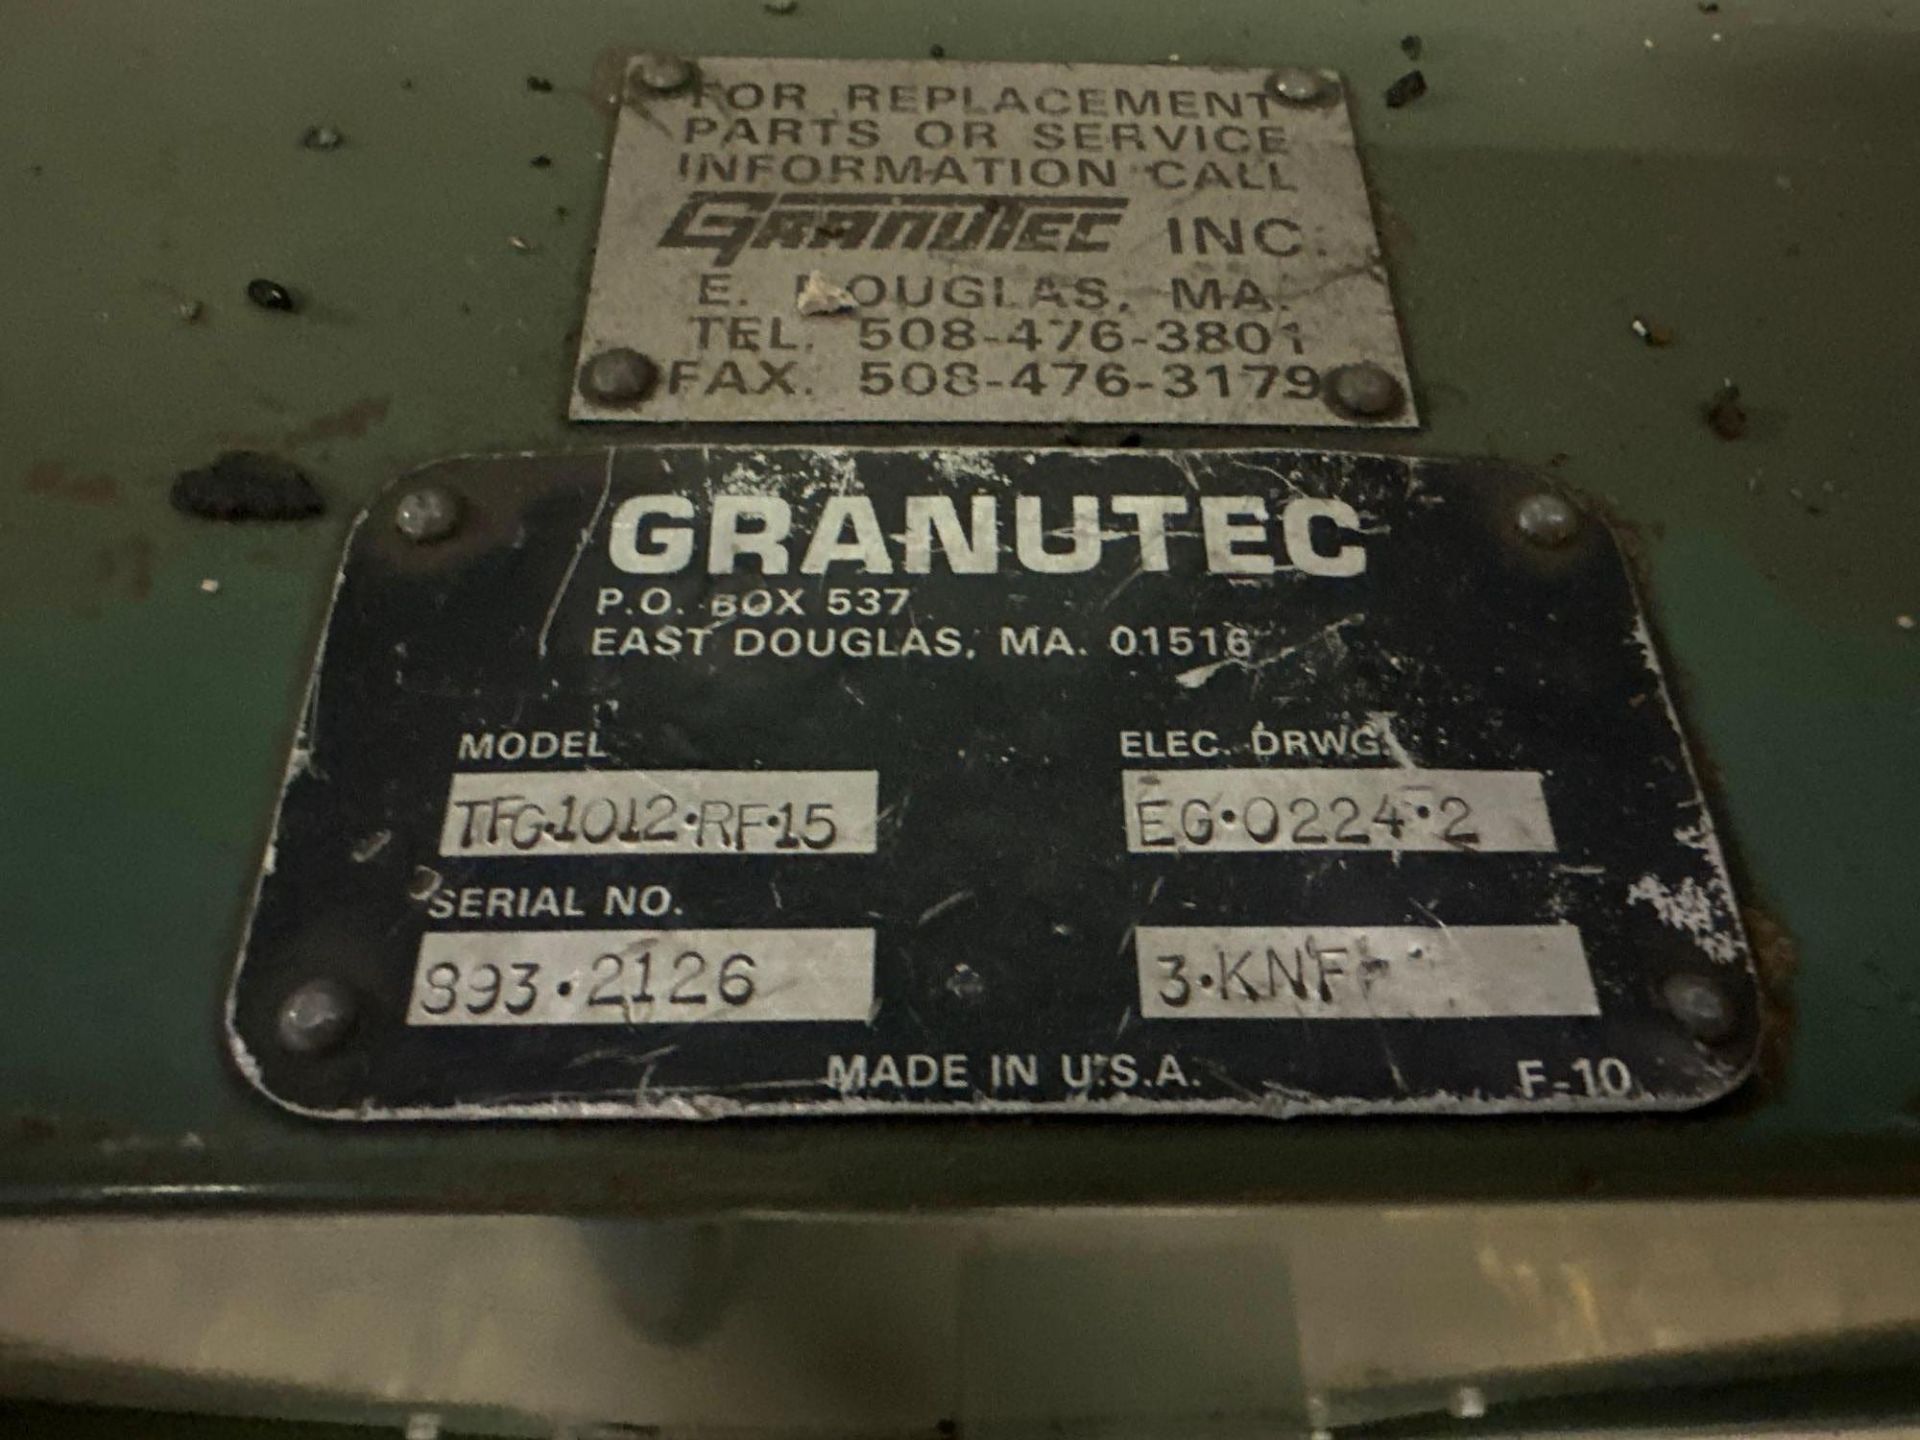 Granutec TFG 1012 Used Granulator, 10x12, 15 hp, 460V, S/N 893.2126 - Image 9 of 9